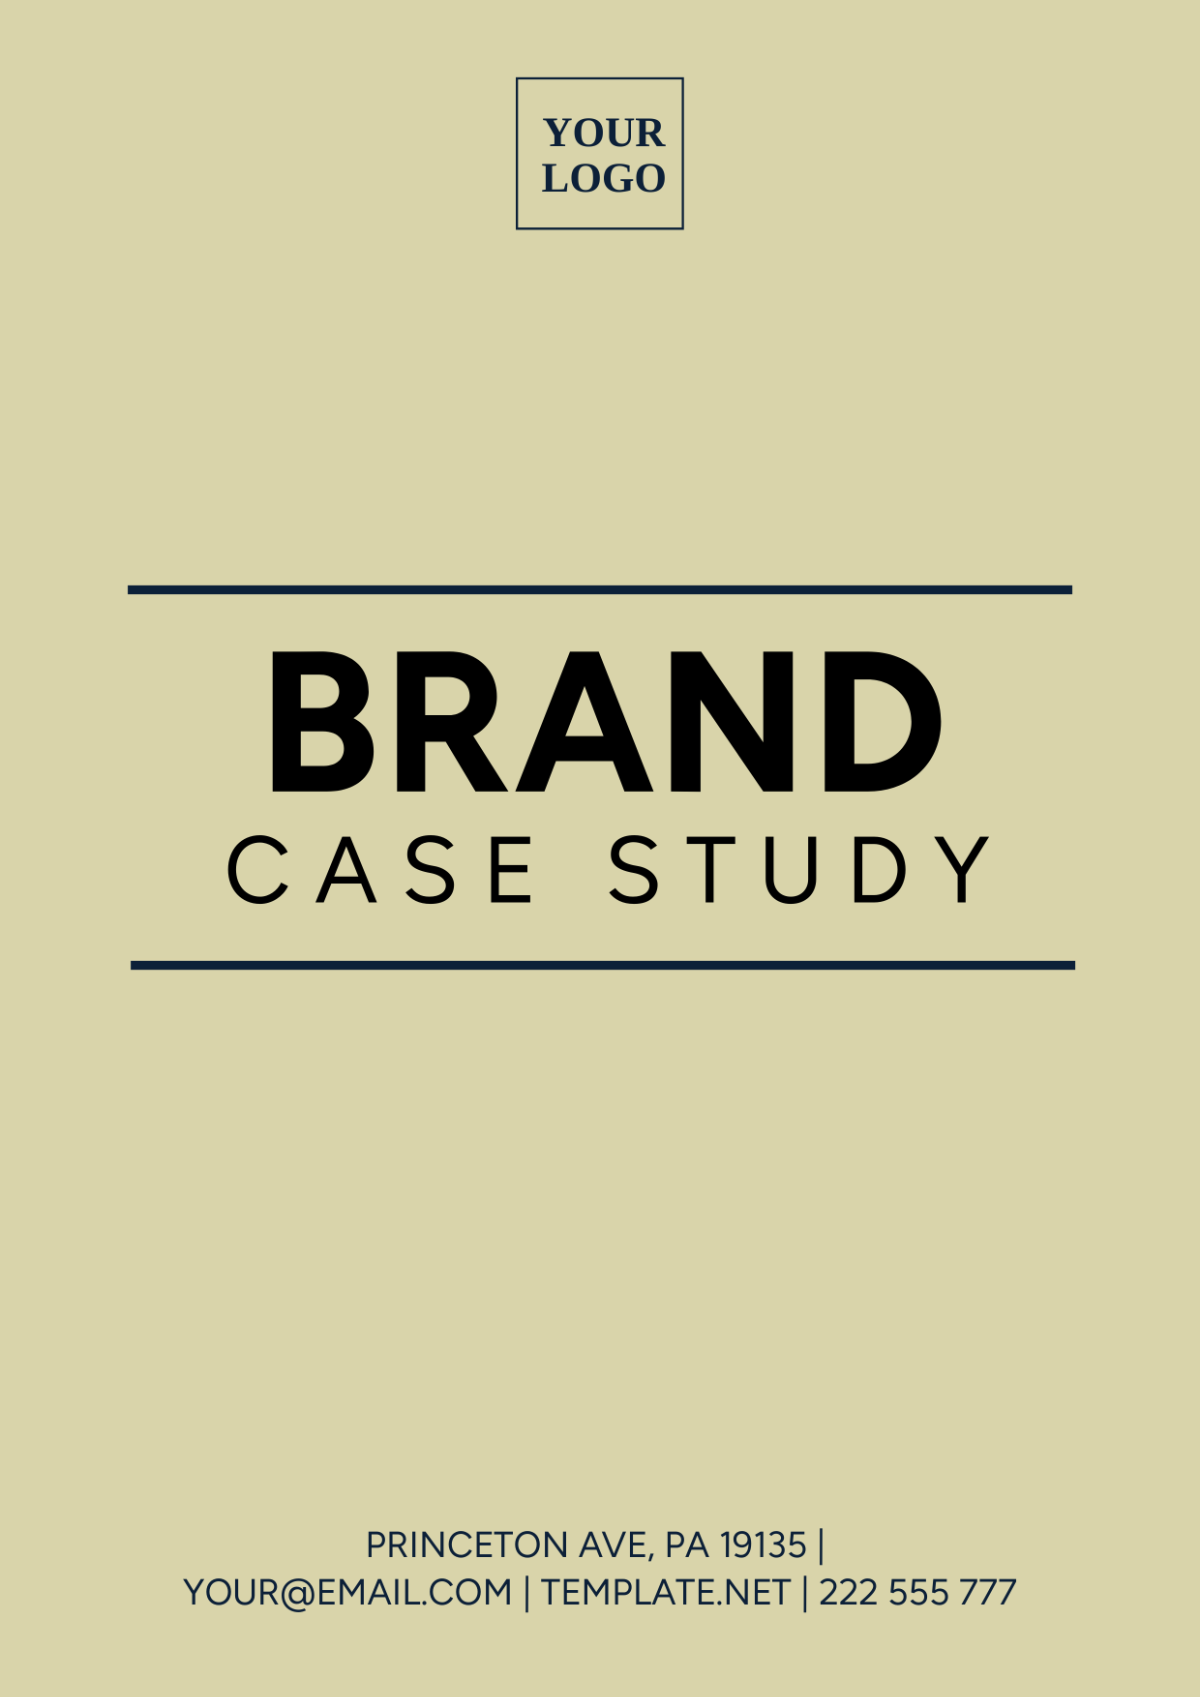 Brand Case Study Template